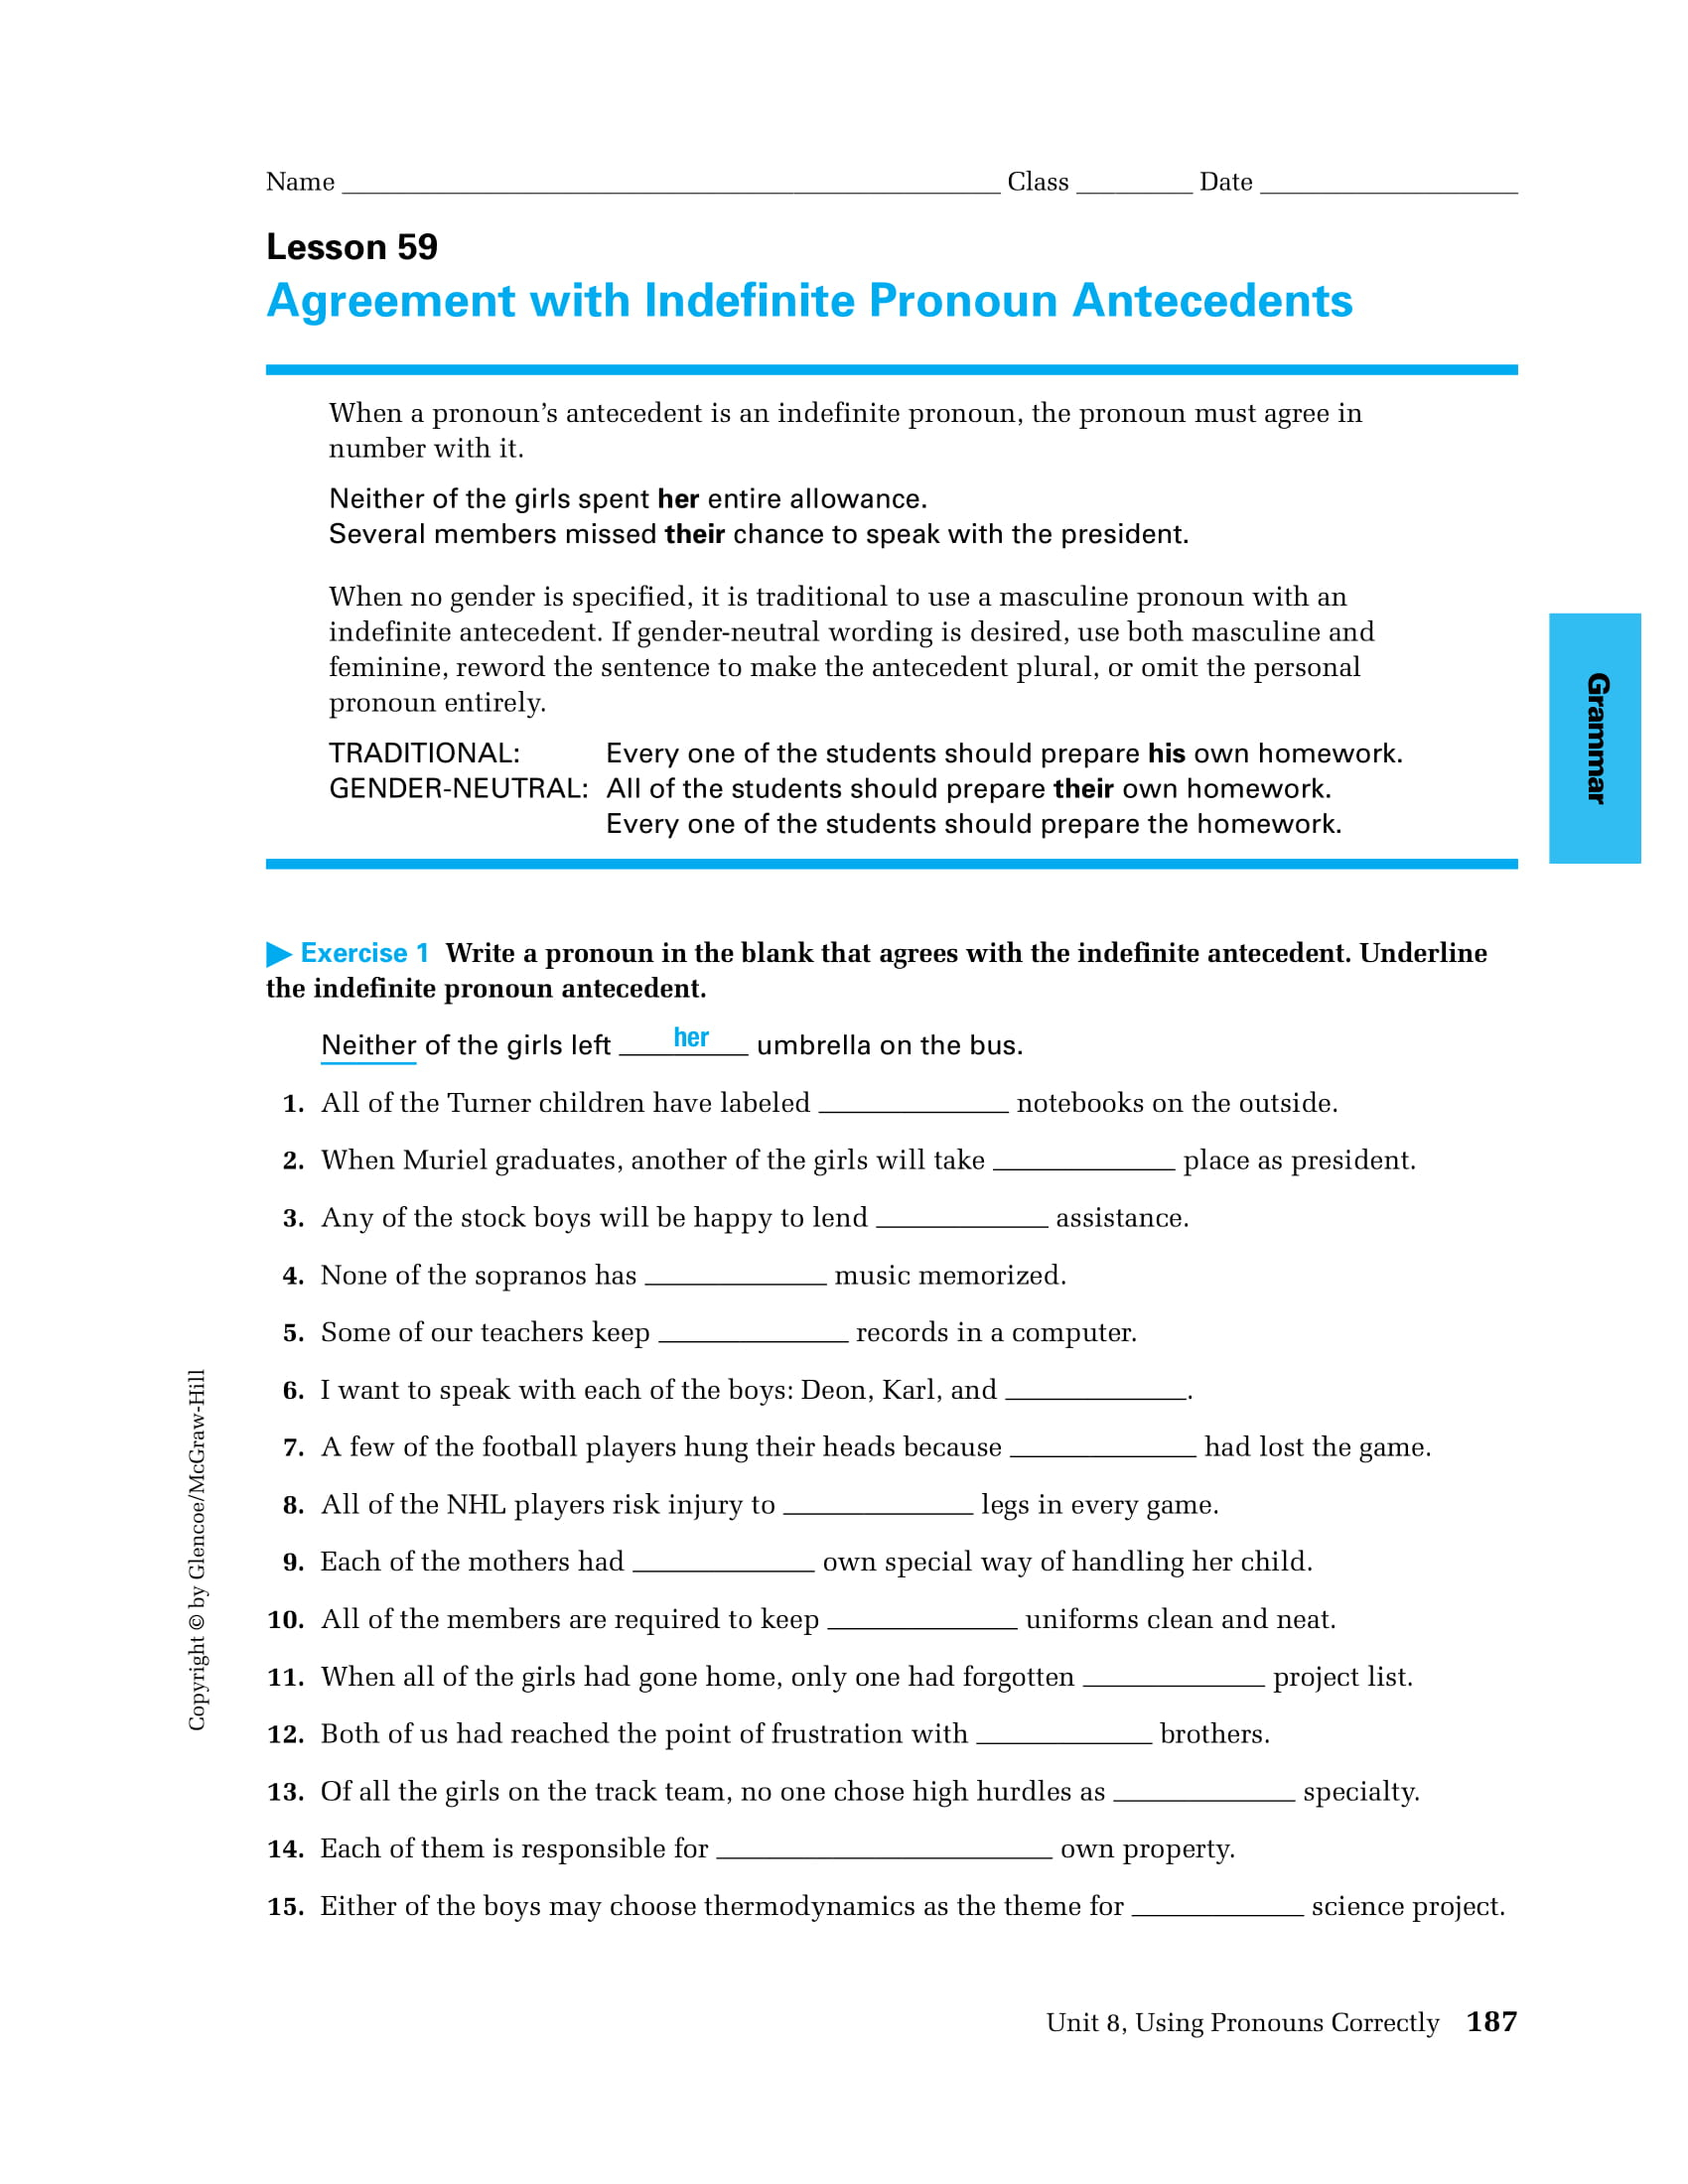 Pronoun Antecedent Agreement Exercises 9 Pronoun Antecedent Examples Pdf Examples